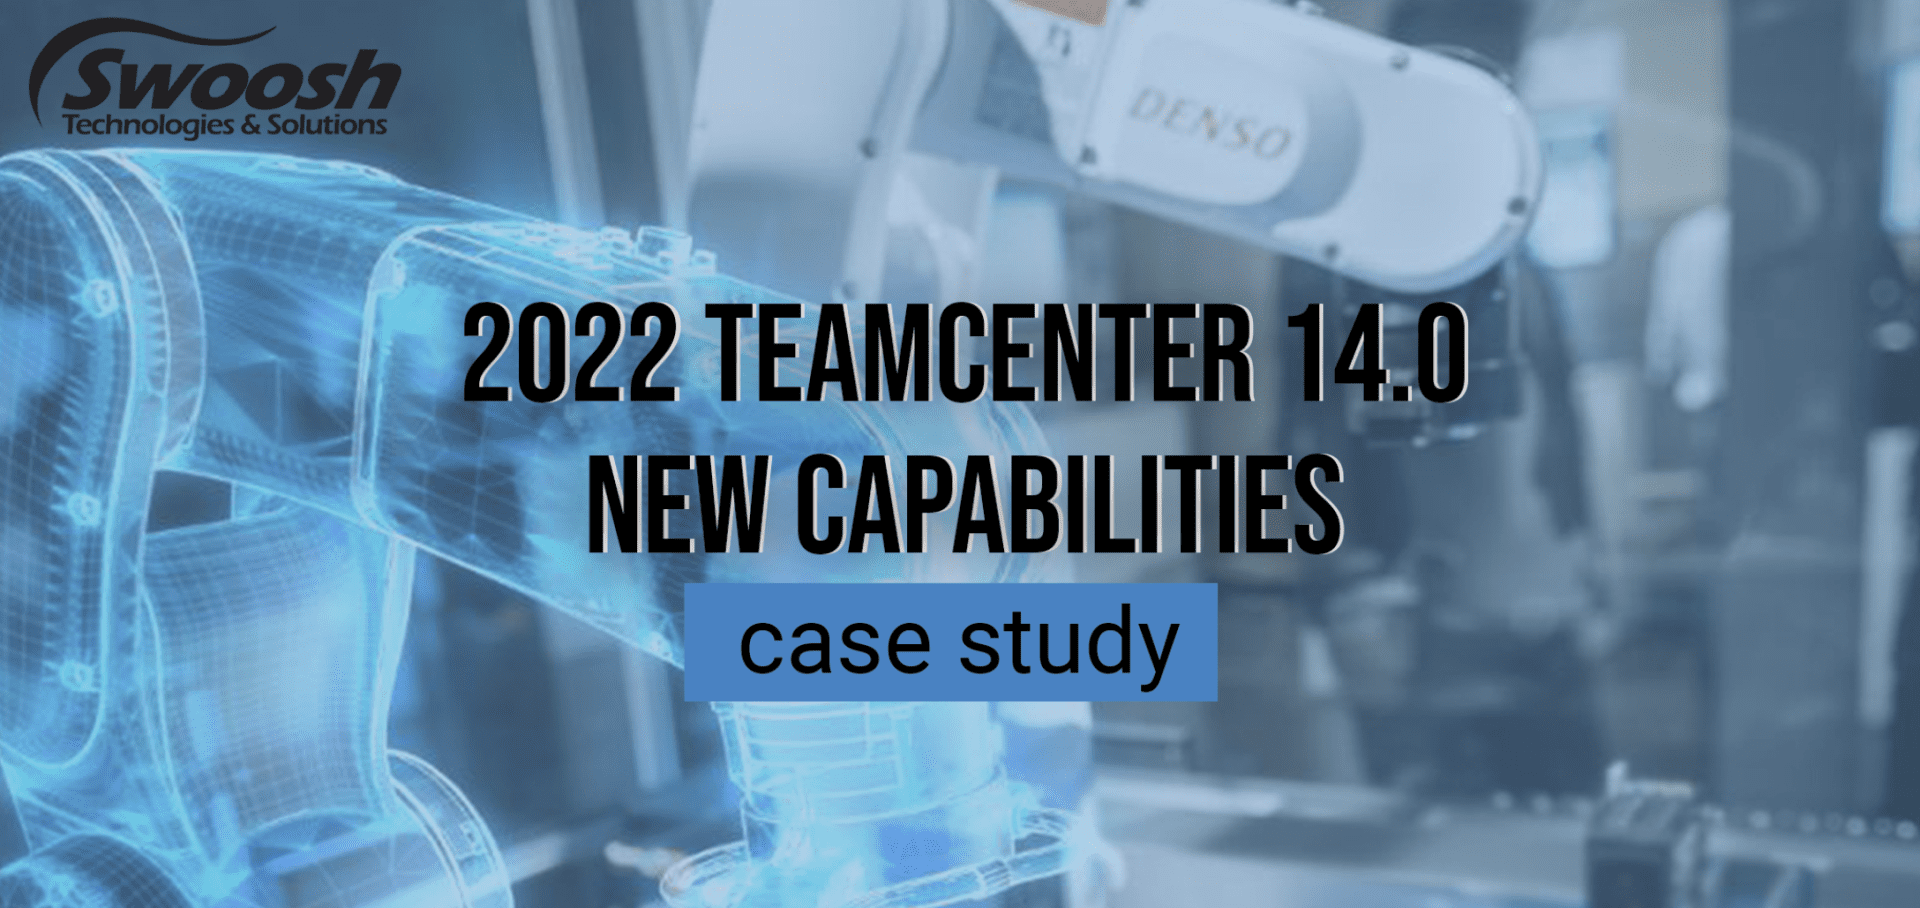 2022 Teamcenter 14.0 Capabilities